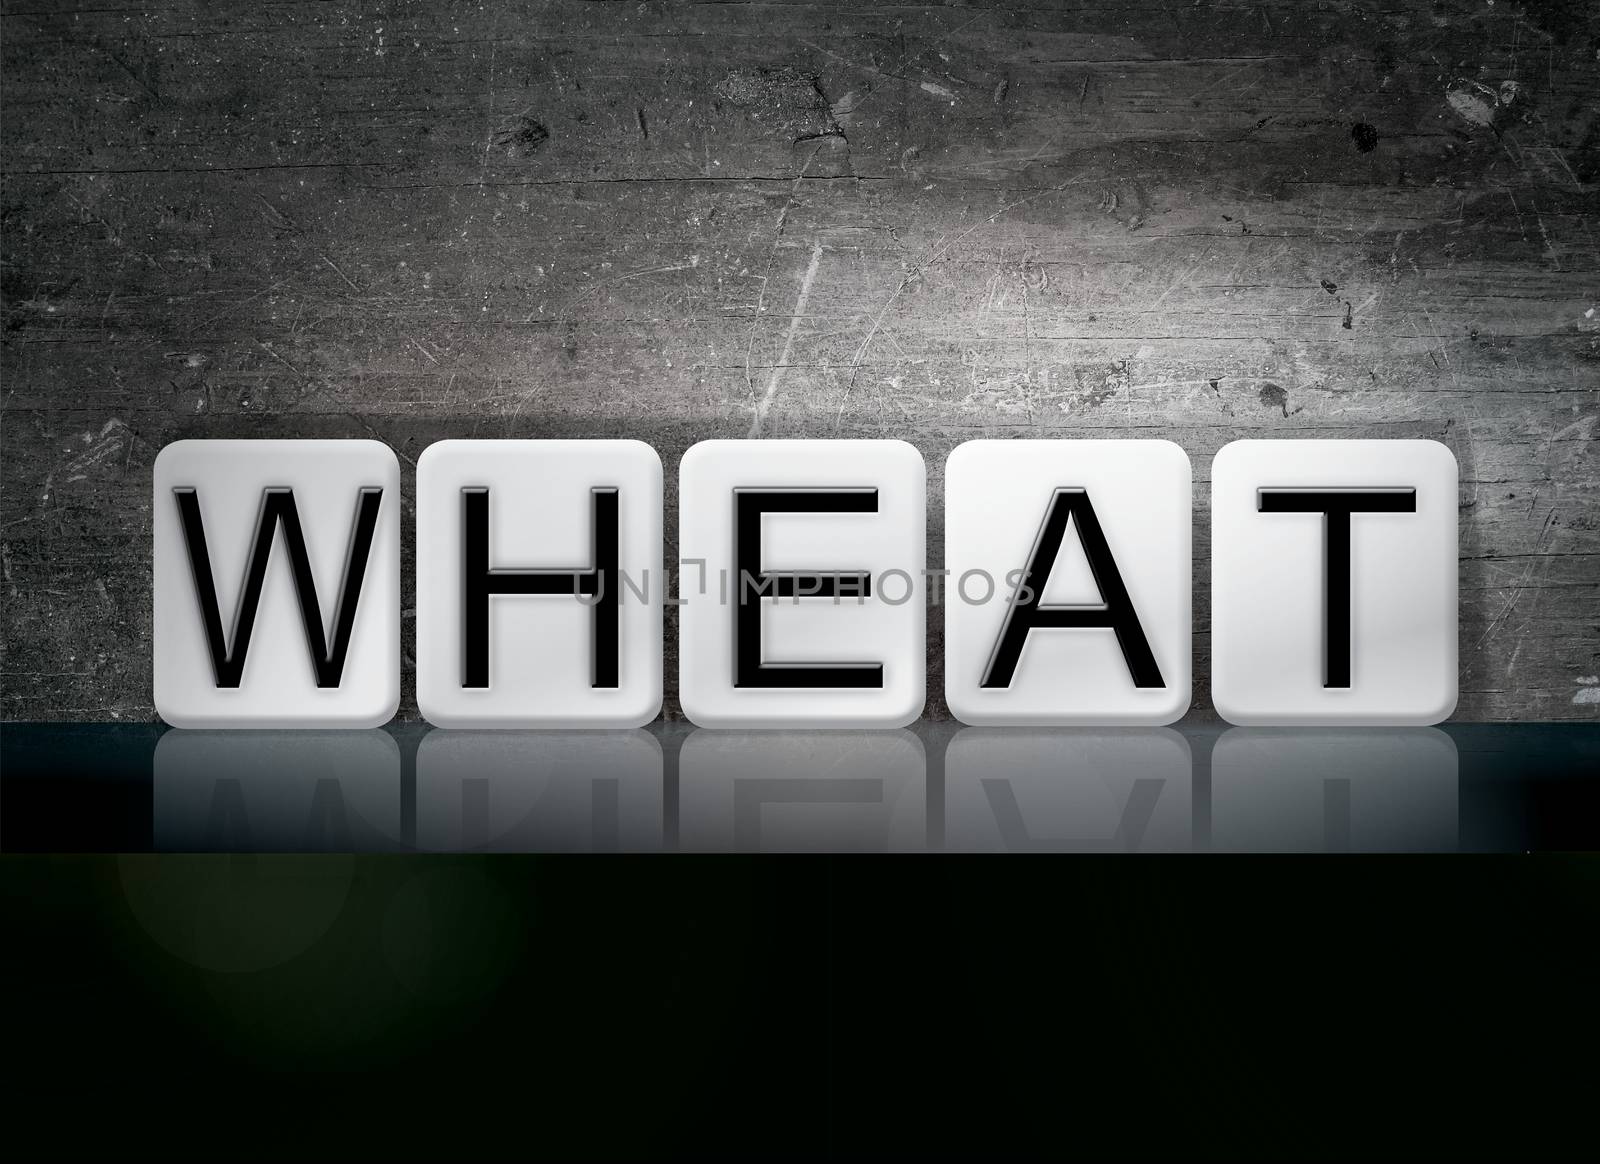 The word "Wheat" written in white tiles against a dark vintage grunge background.